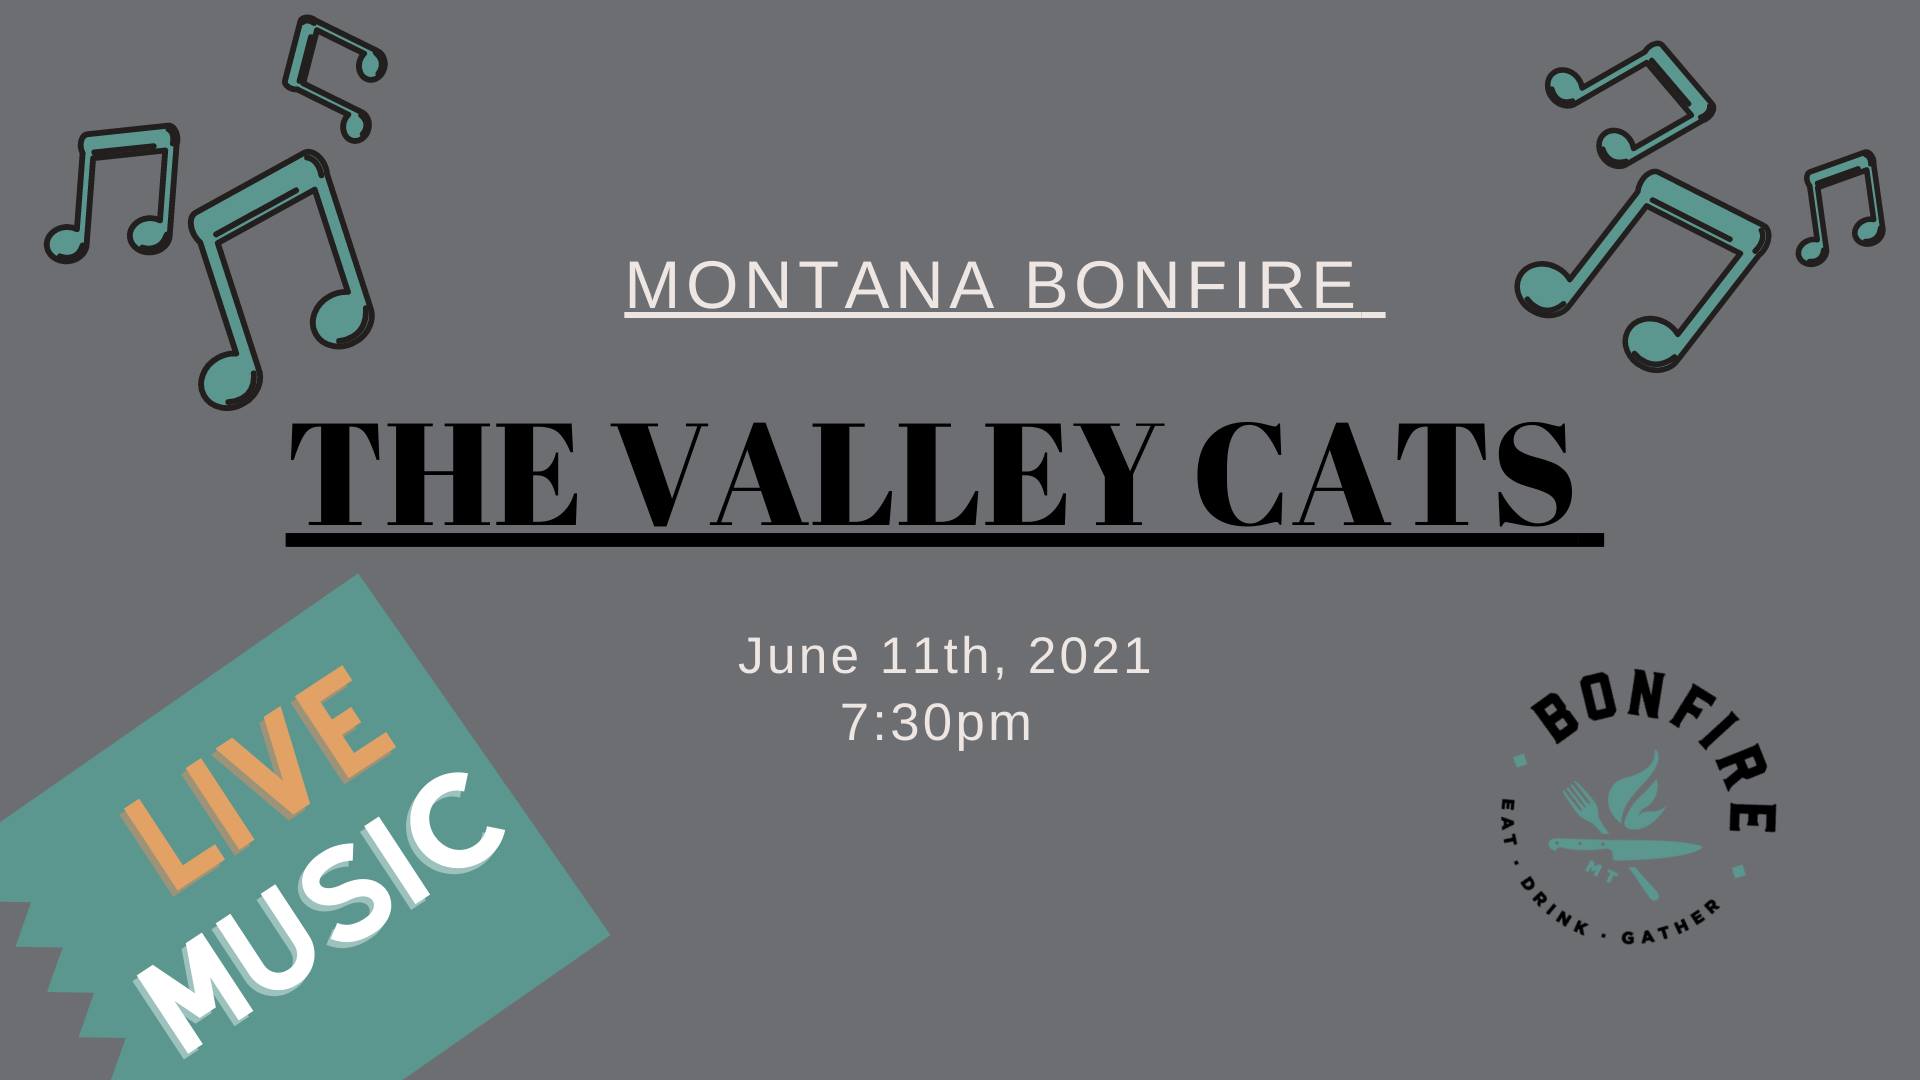 The Valley Cats at Montana Bonfire